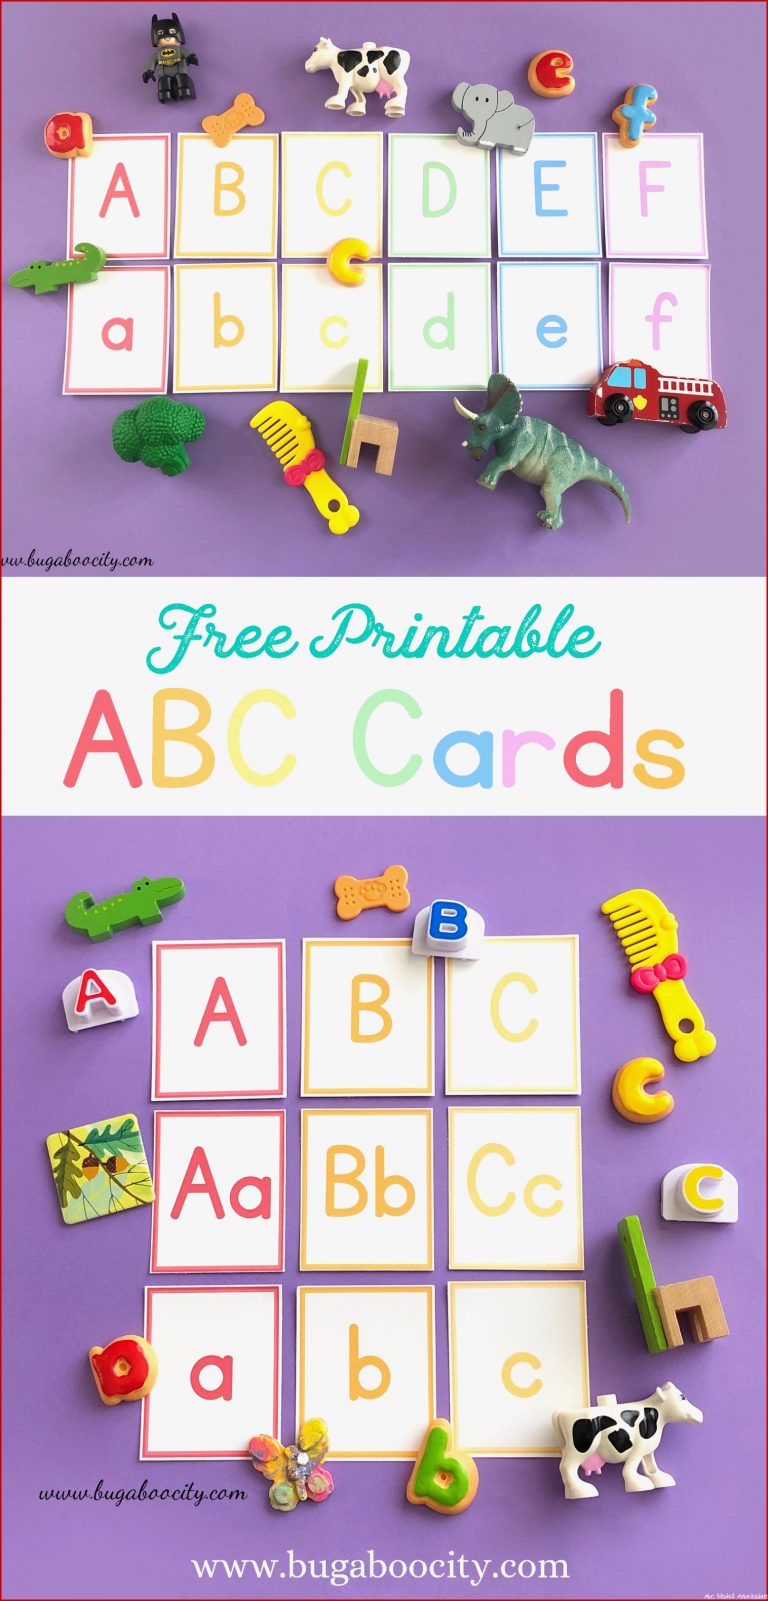 Free Printable ABC Cards